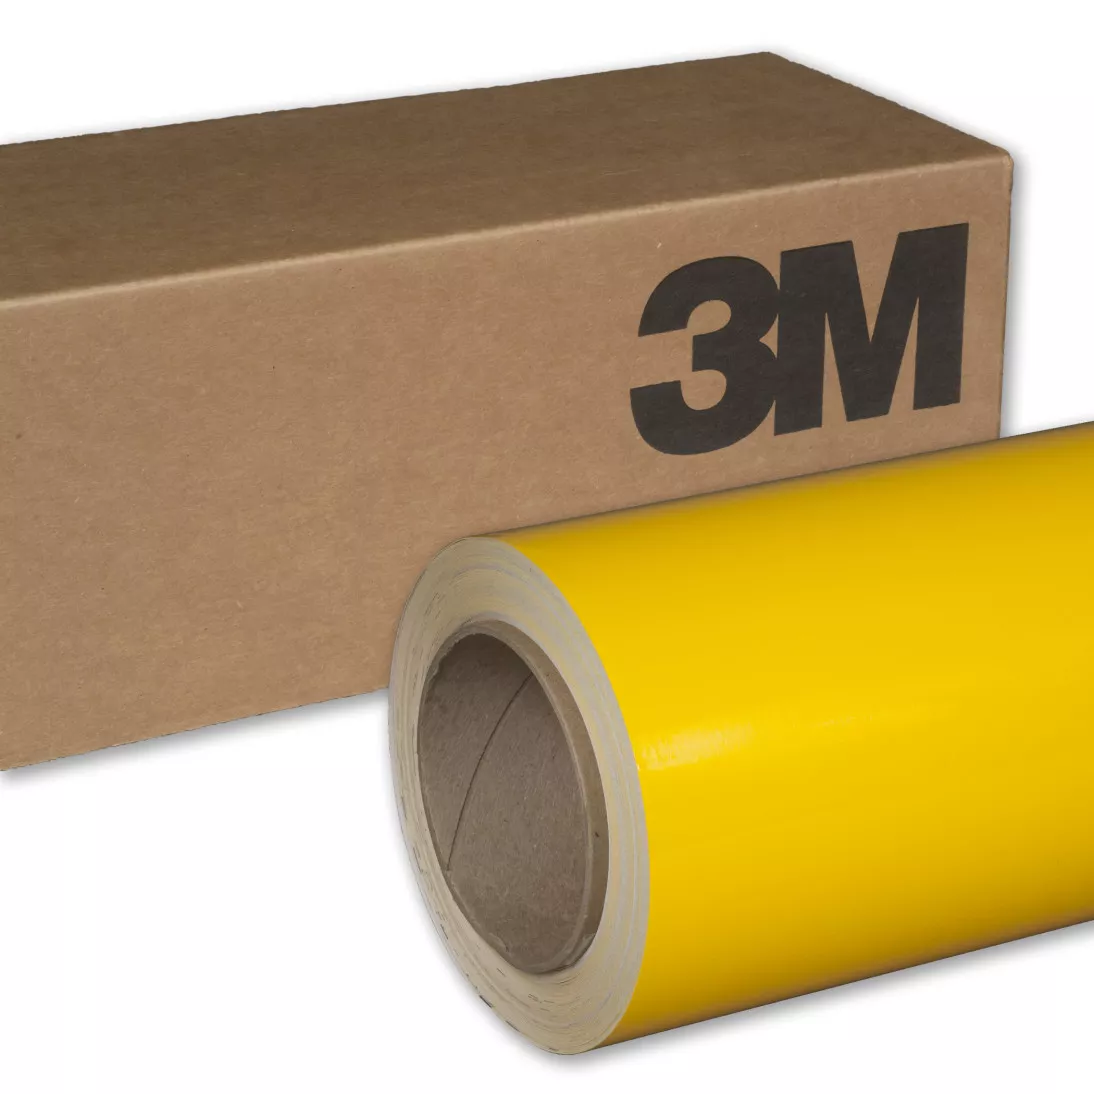 3M™ Wrap Film Series 1080-G25, Gloss Sunflower, 60 in x 5 yd